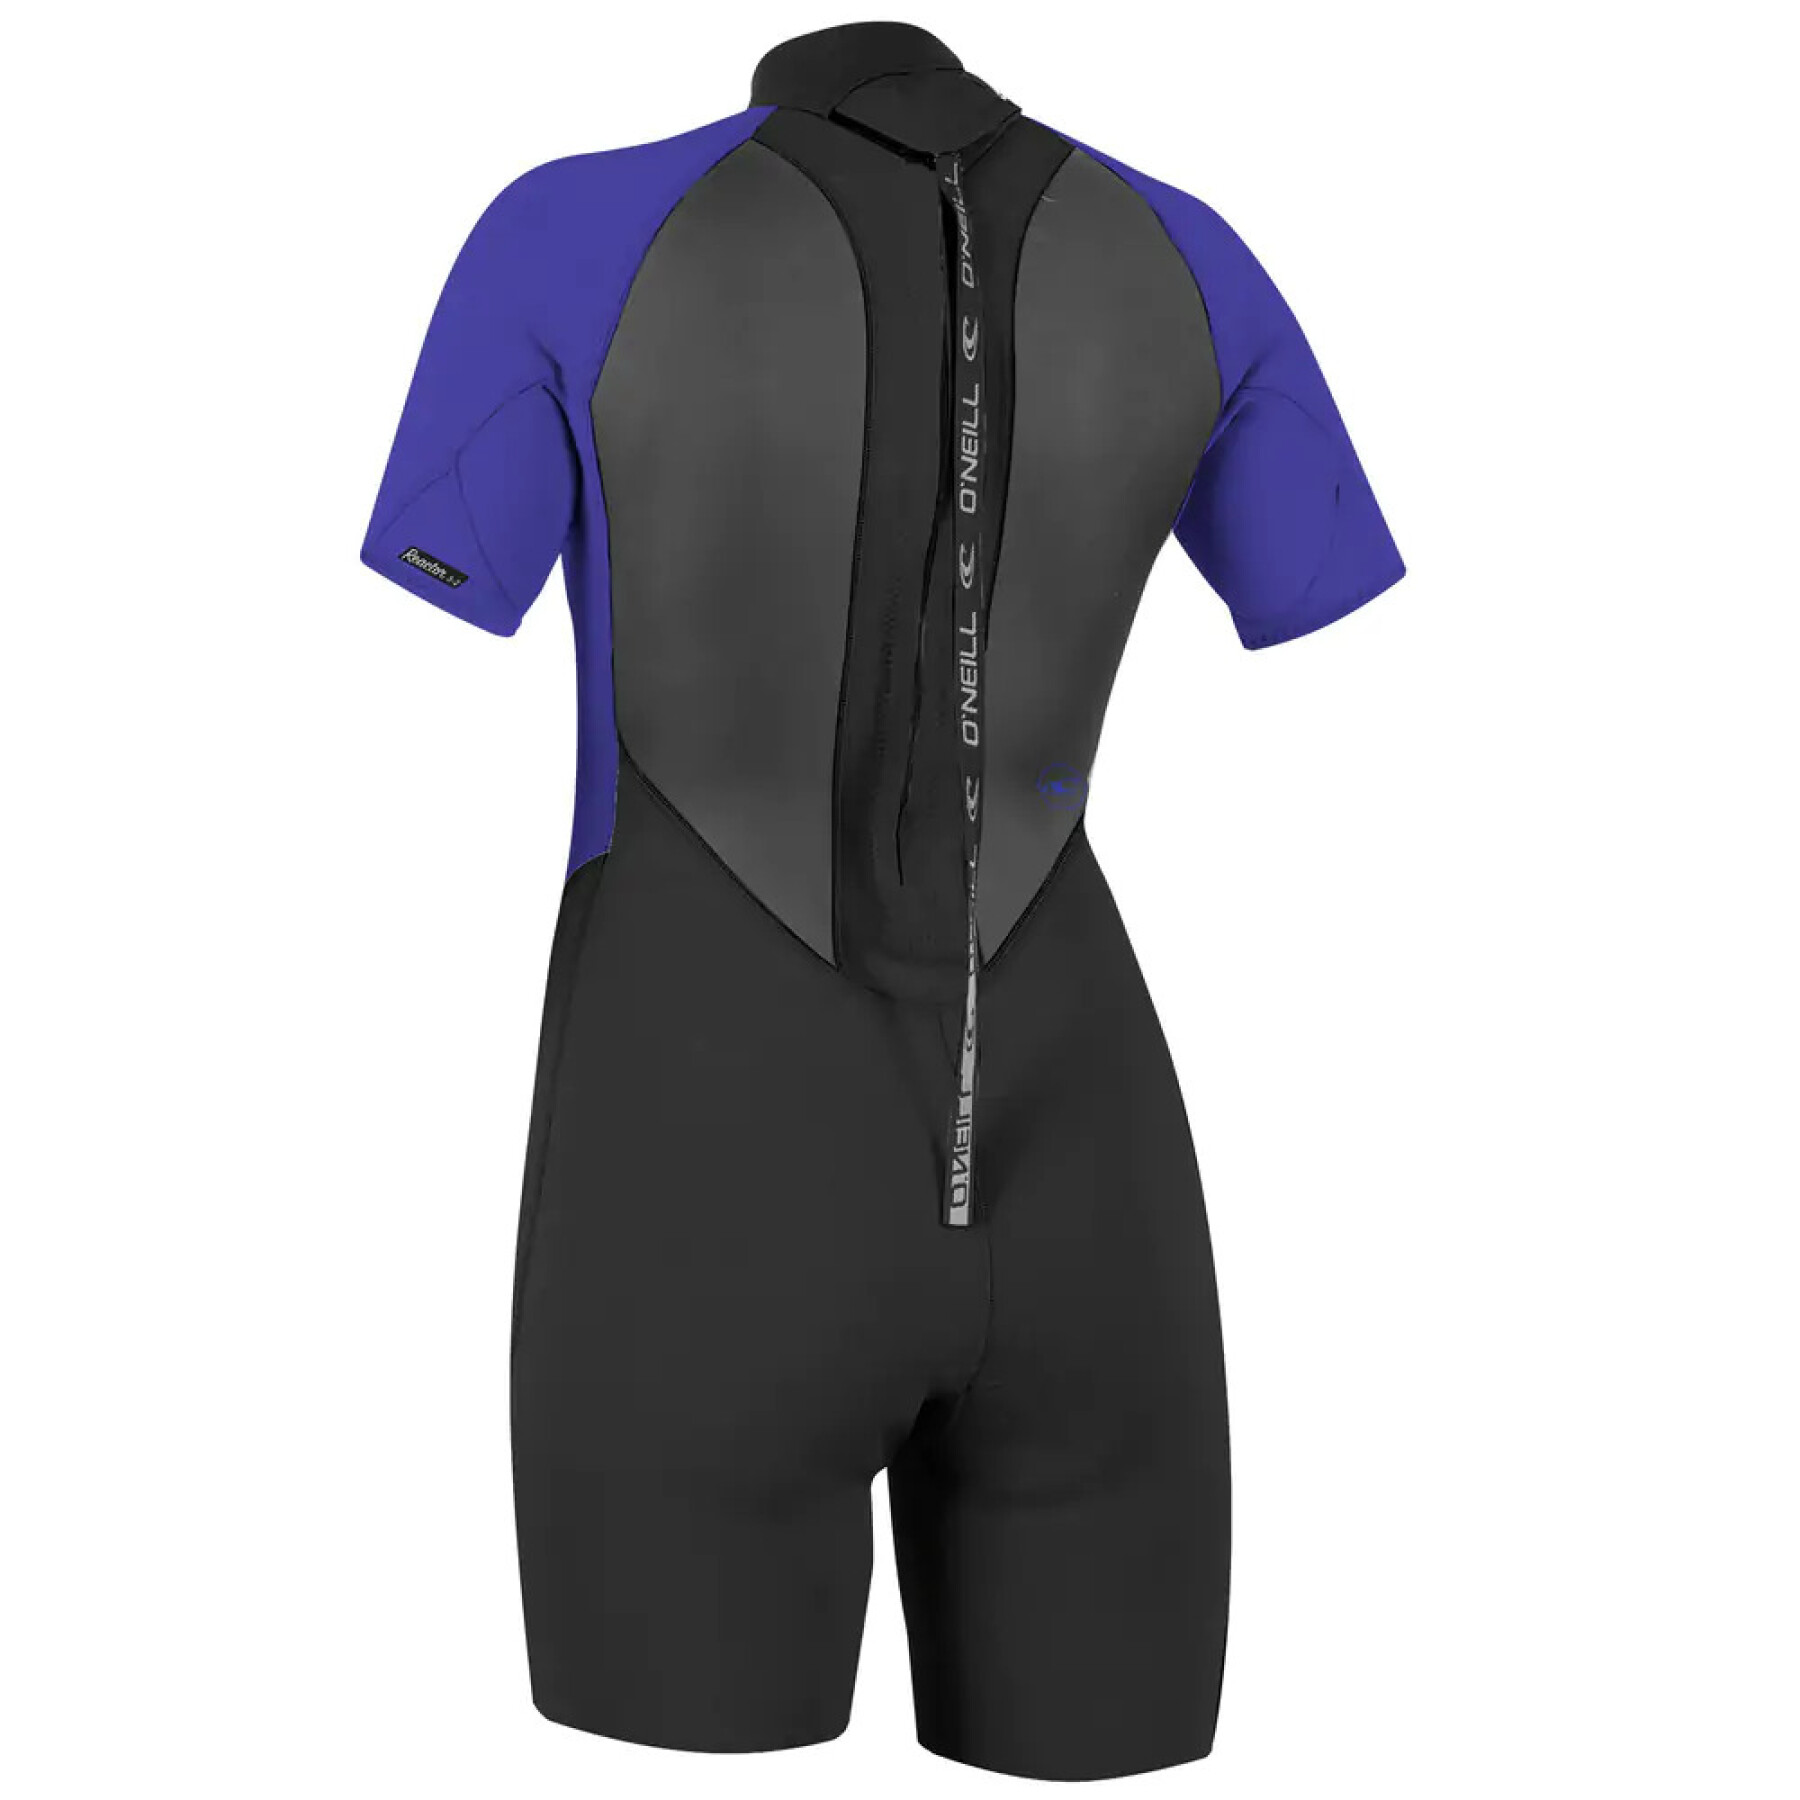 Women's zip-back wetsuit O'Neill Reactor-2 2 mm